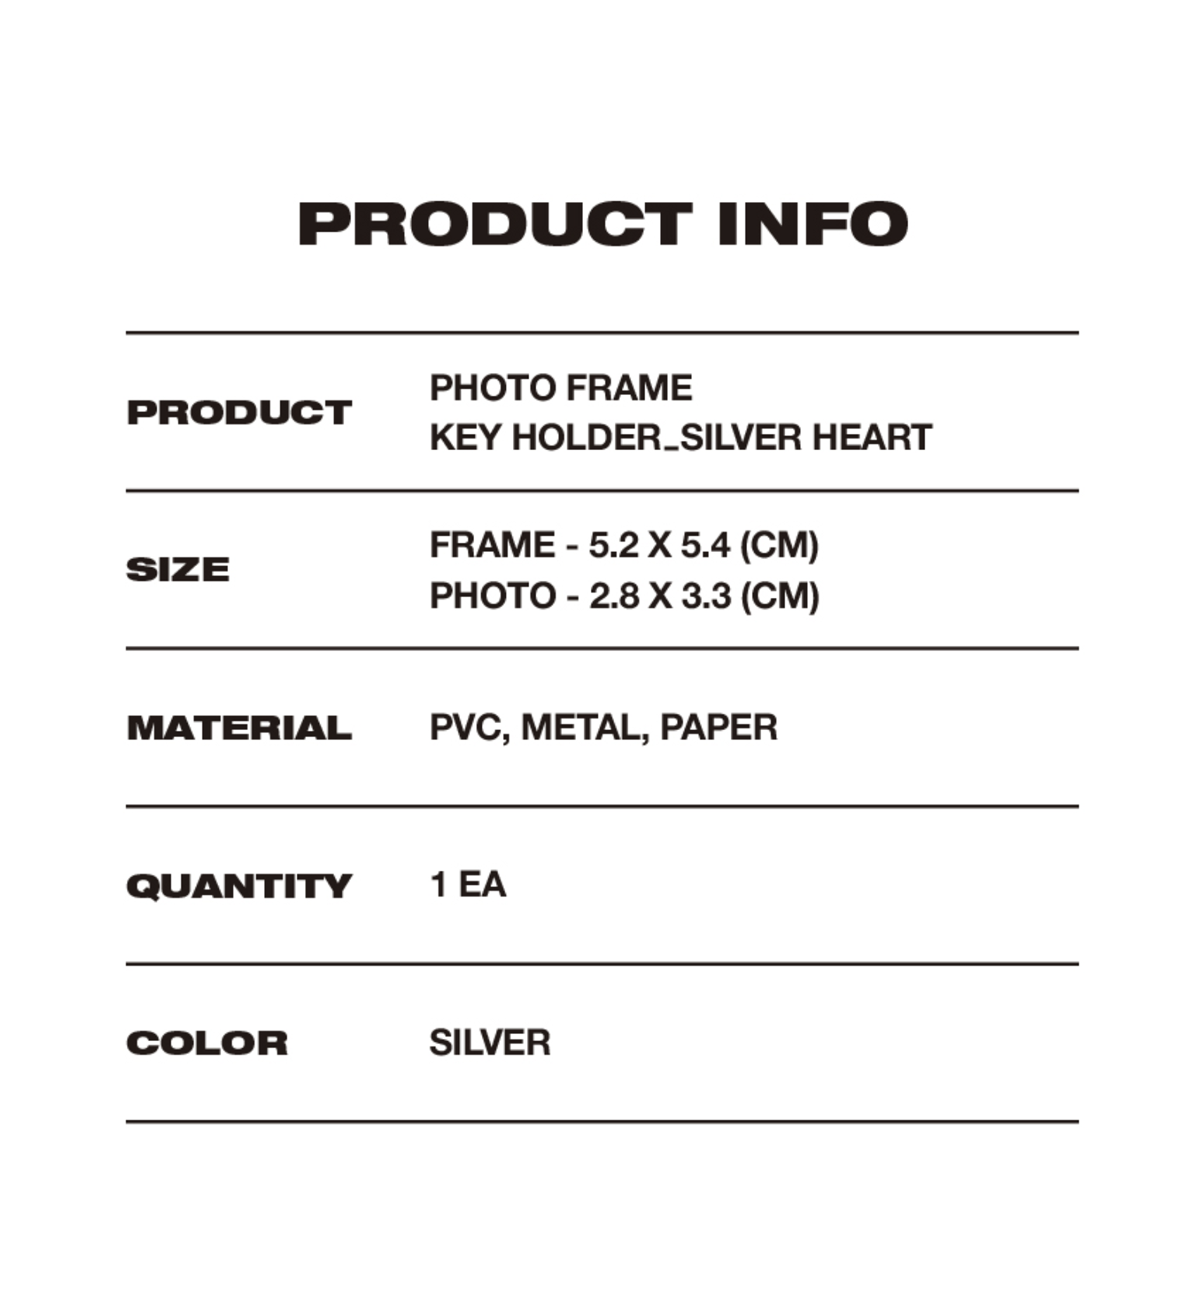 Photo Frame Key Holder [Silver Heart]